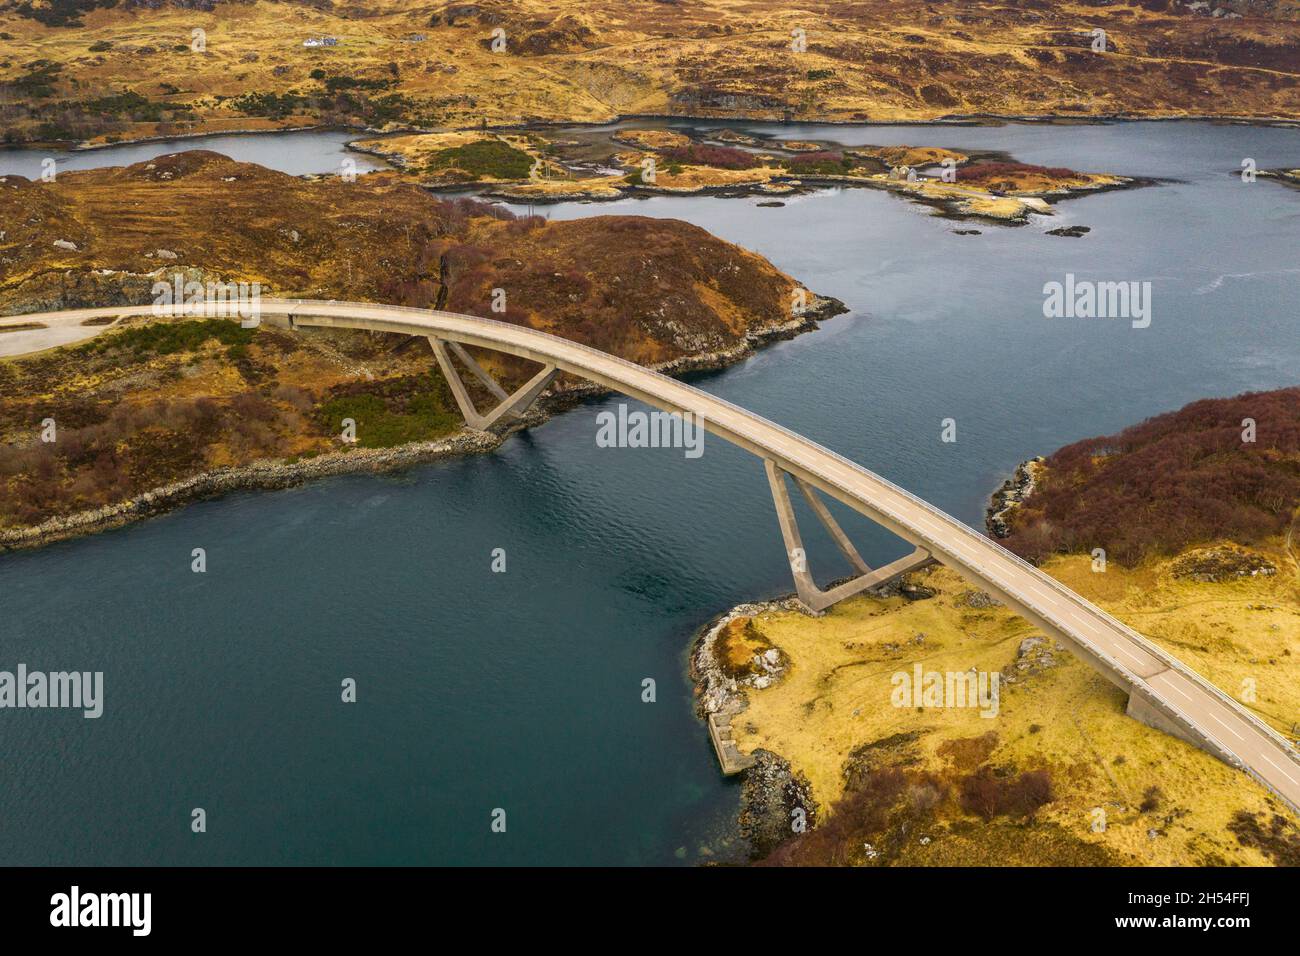 Die Kylesku-Brücke (bekannt seit 2019 unter dem gälisch-gälischenNamen Drochaid A' Chaolais Chumhaing) ist eine markant geschwungene Betonkastenträgerbrücke. Stockfoto